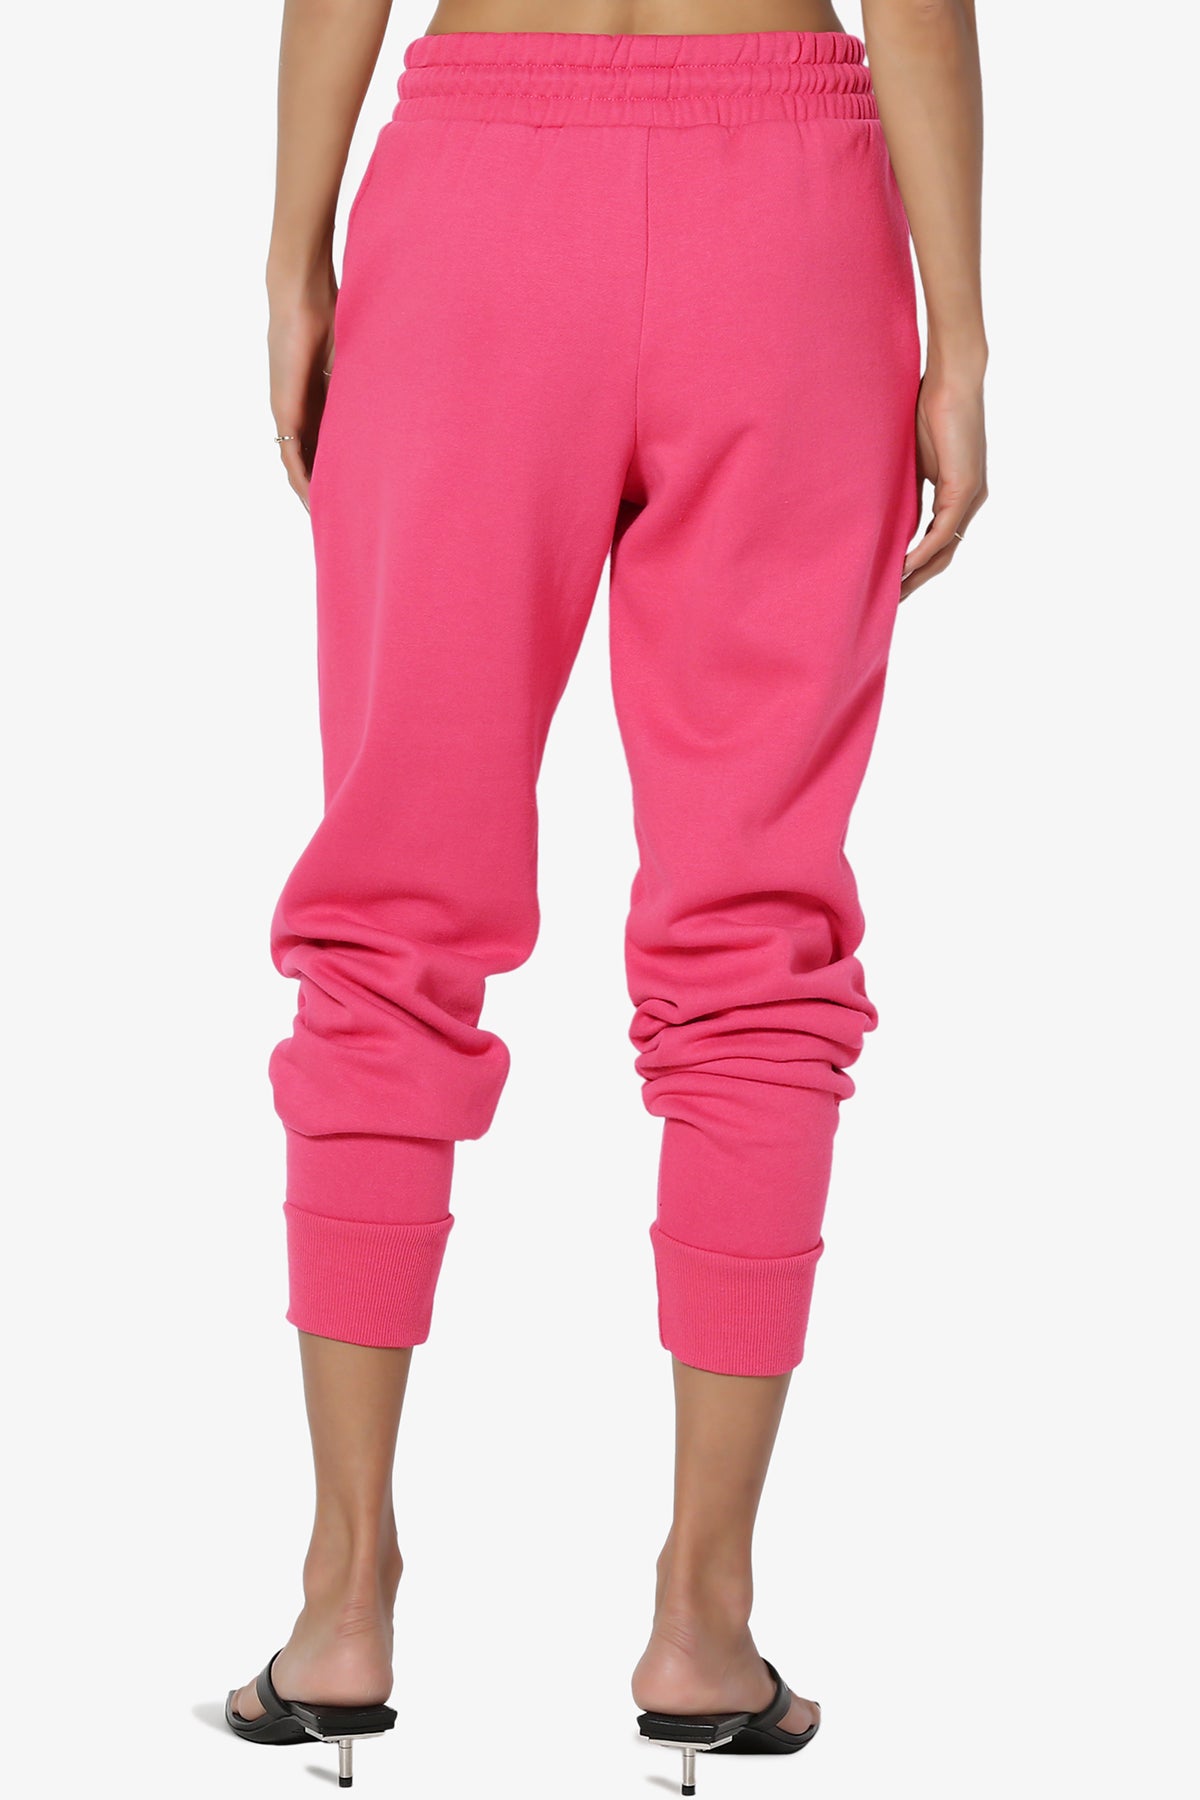 New Sofra Ladies Comfortable Low Rise Sweatpants Hot Pink Small Medium  Large